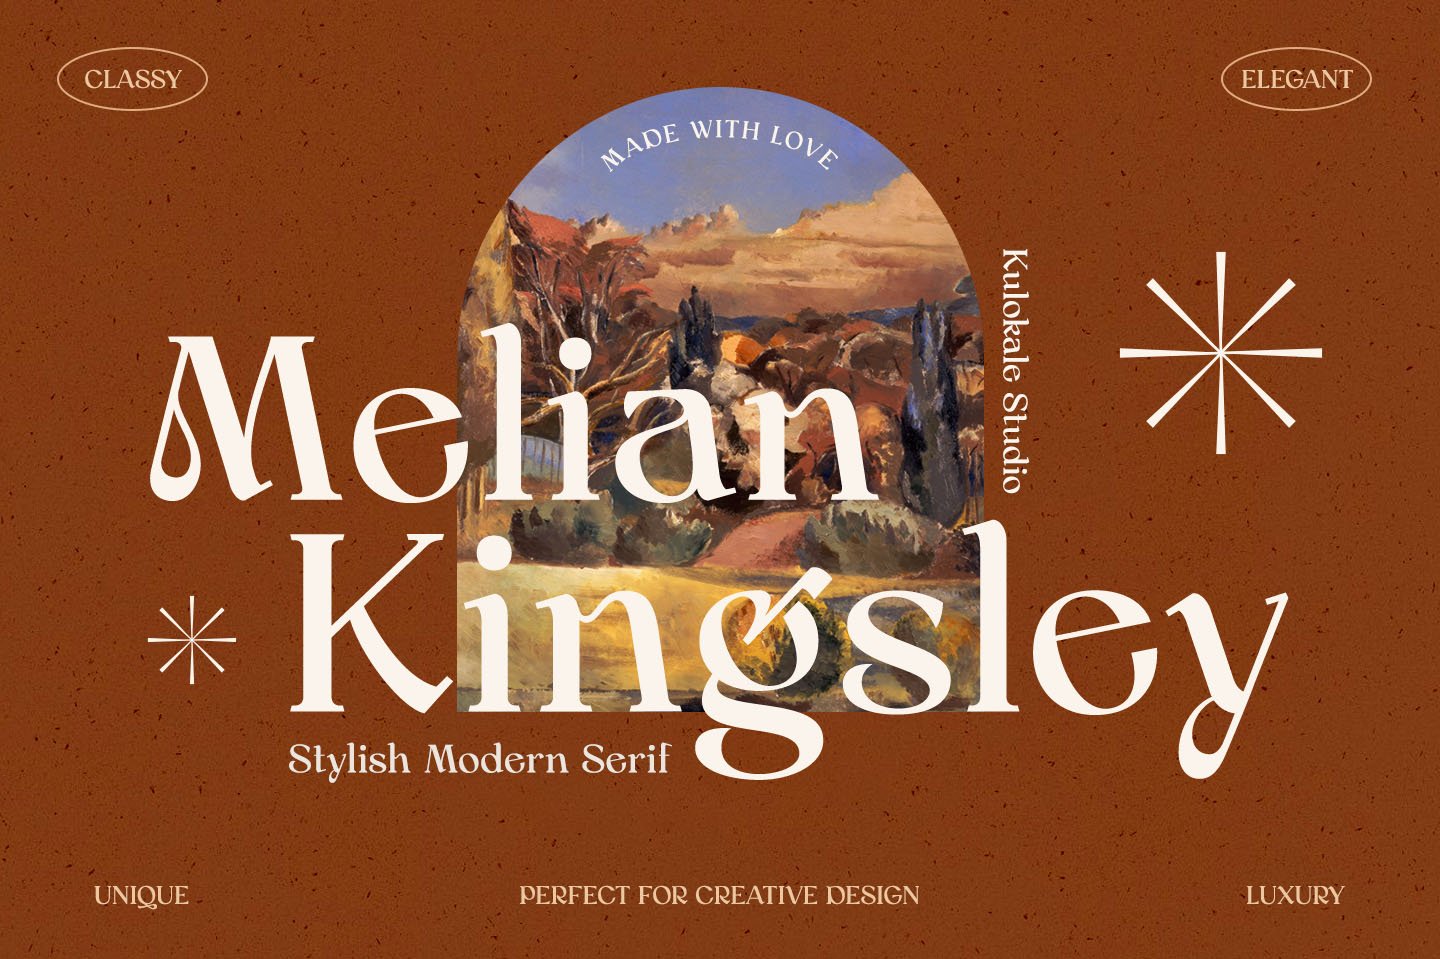 Melian Kingsley - Modern Serif cover image.